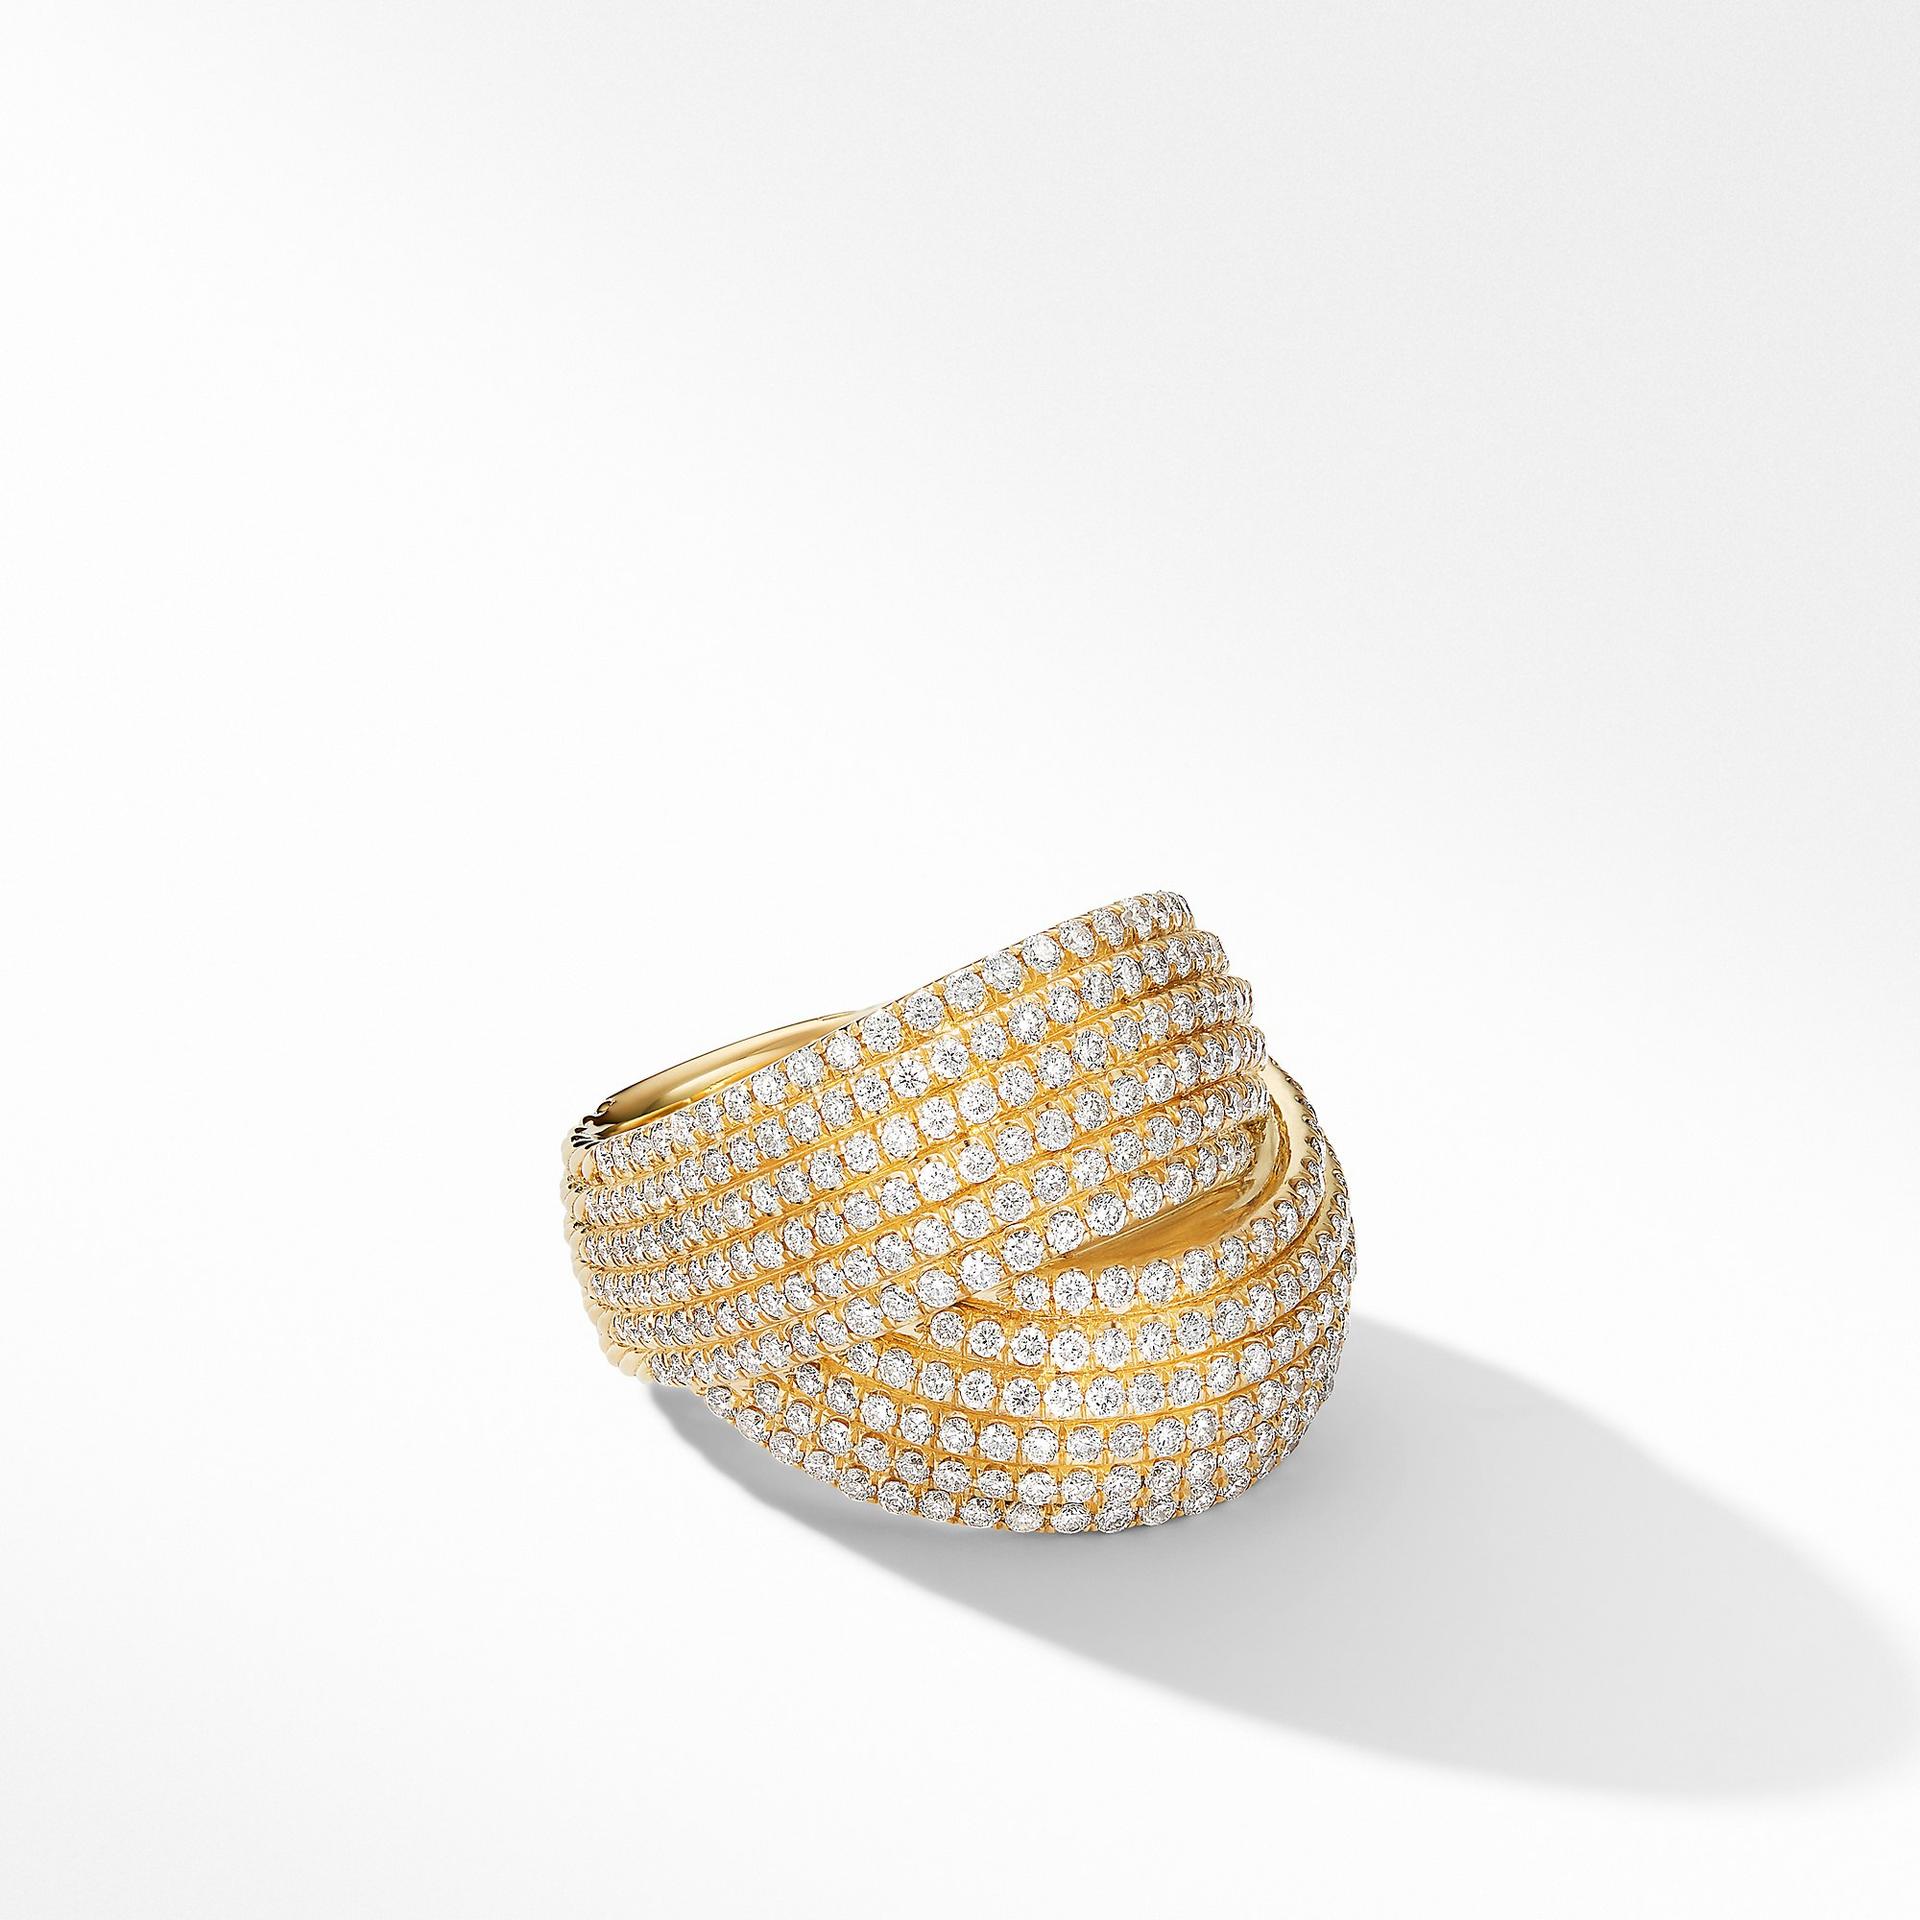 David Yurman Origami Crossover Ring in 18K Yellow Gold with Diamonds 0